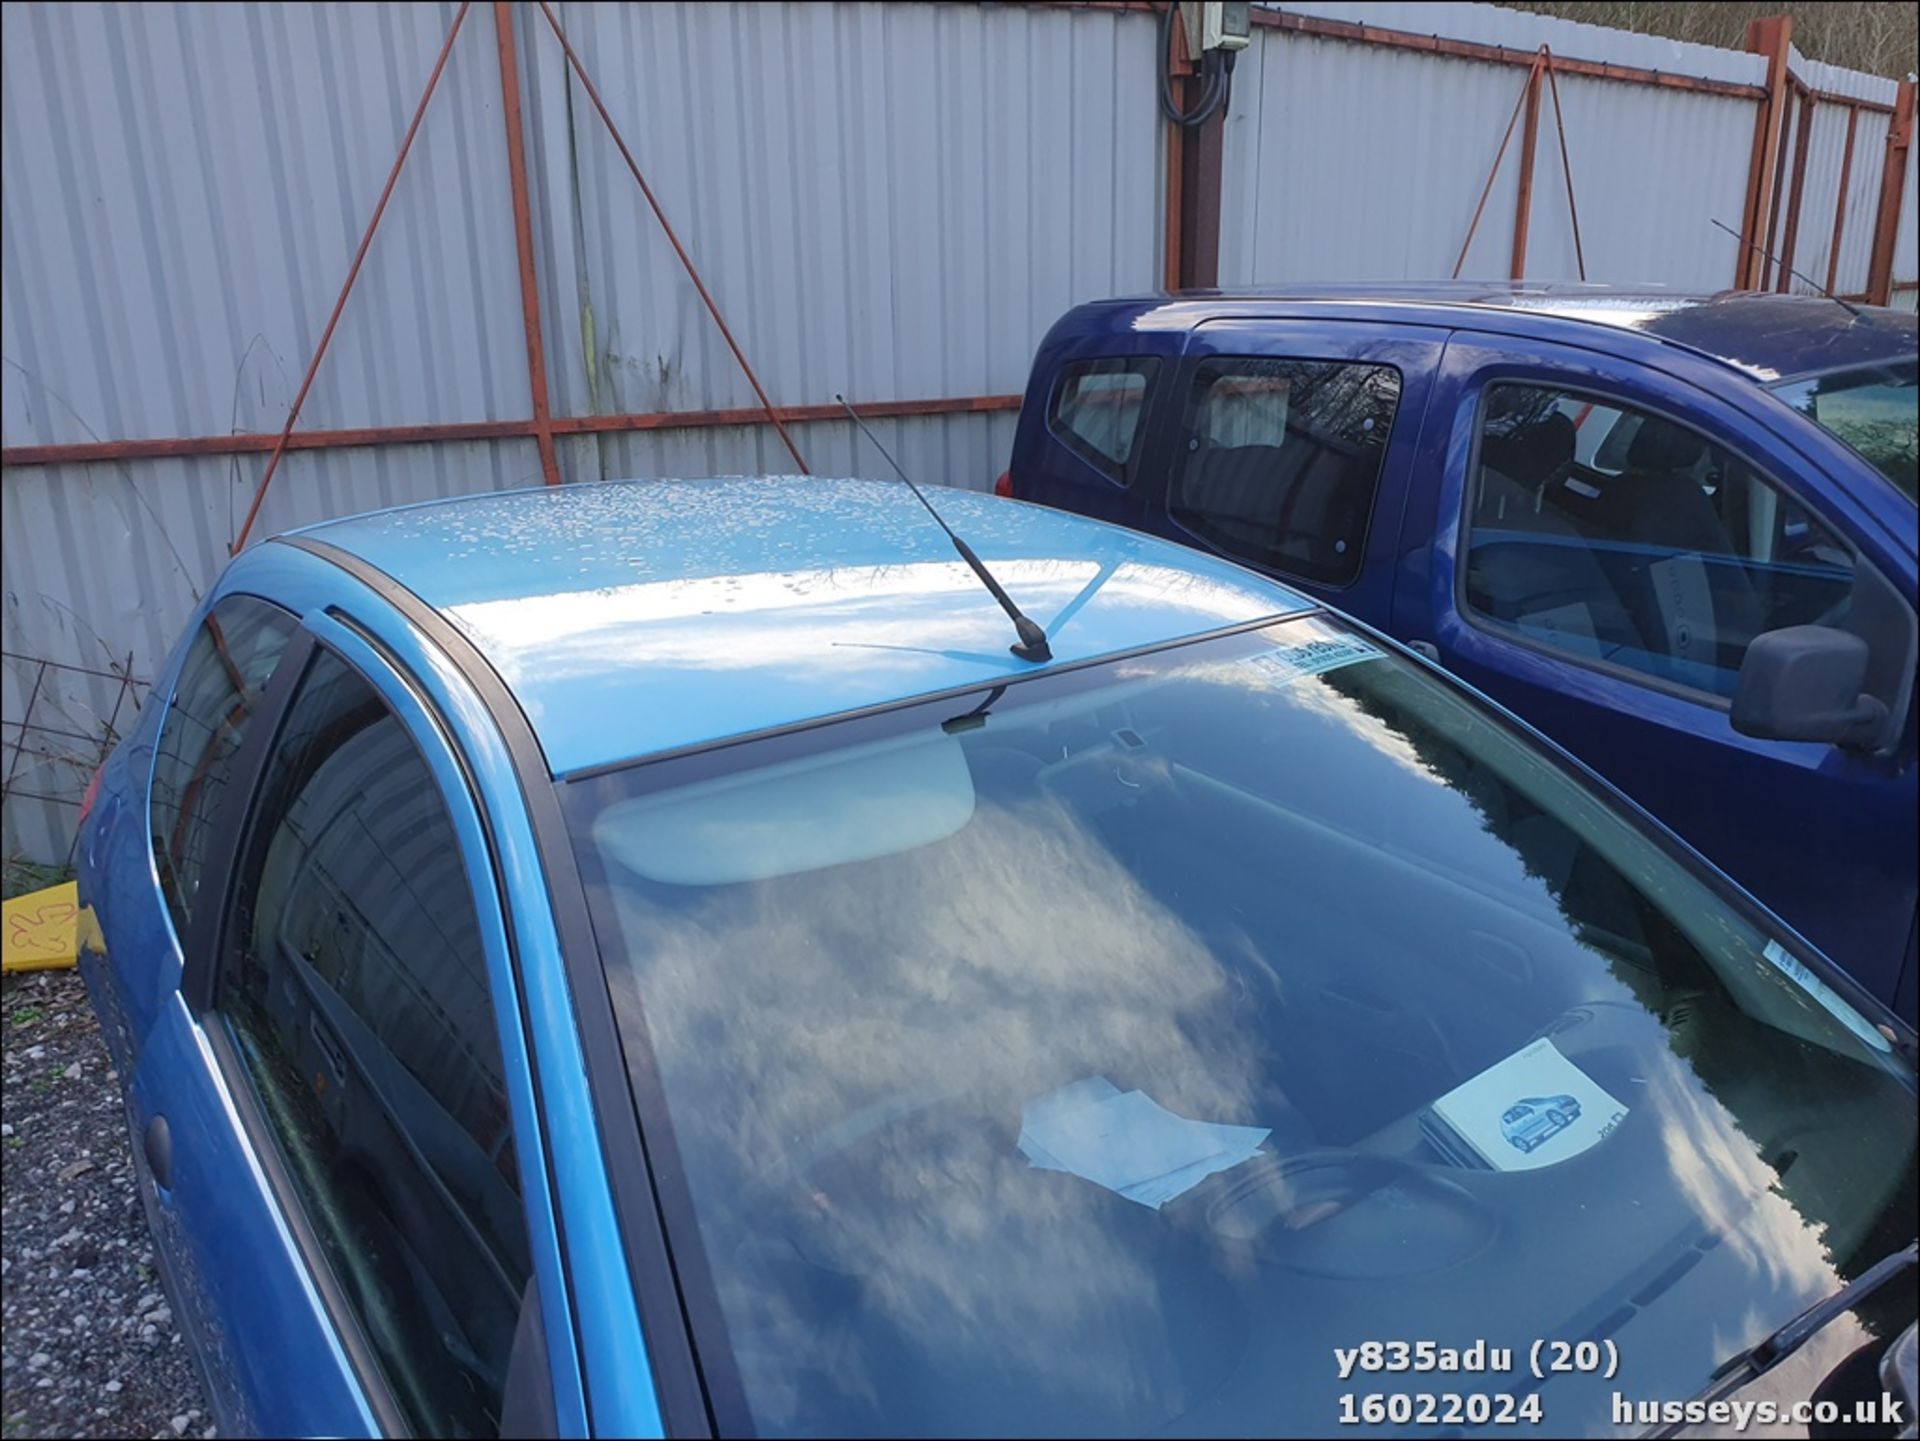 2001 PEUGEOT 206 LX AUTO - 1360cc 3dr Hatchback (Blue, 85k) - Image 21 of 22